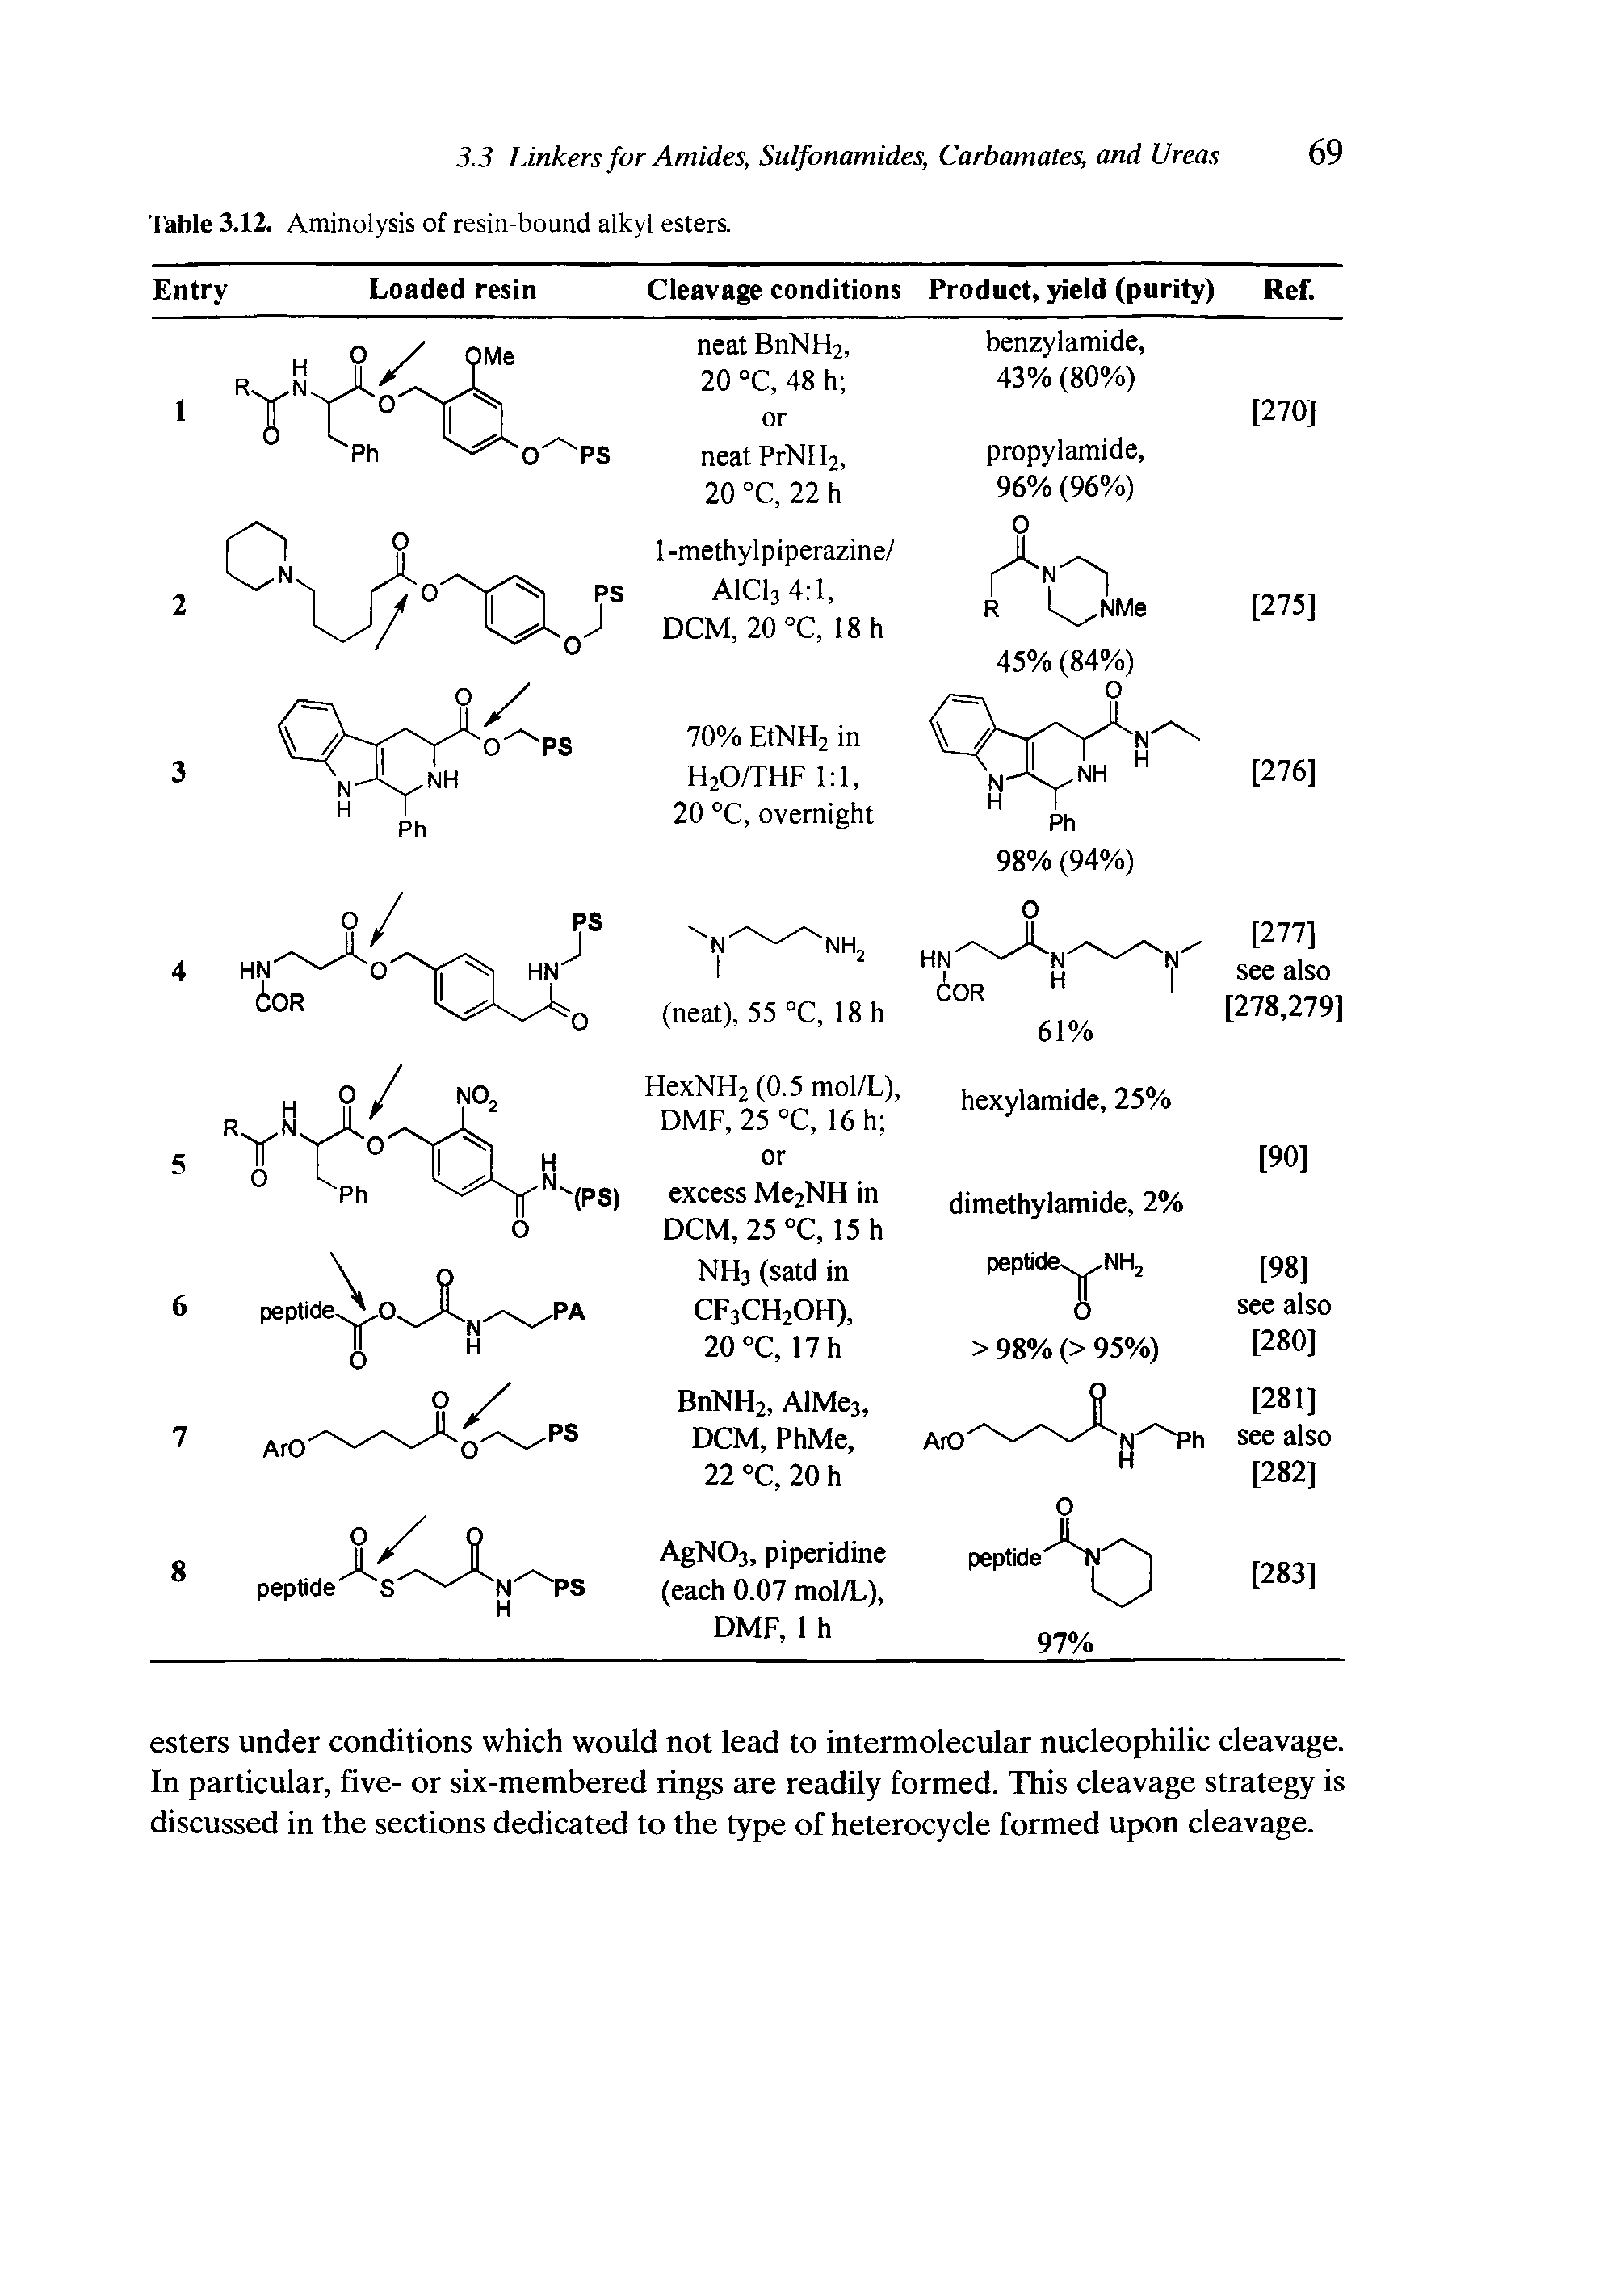 Table 3.12. Aminolysis of resin-bound alkyl esters.